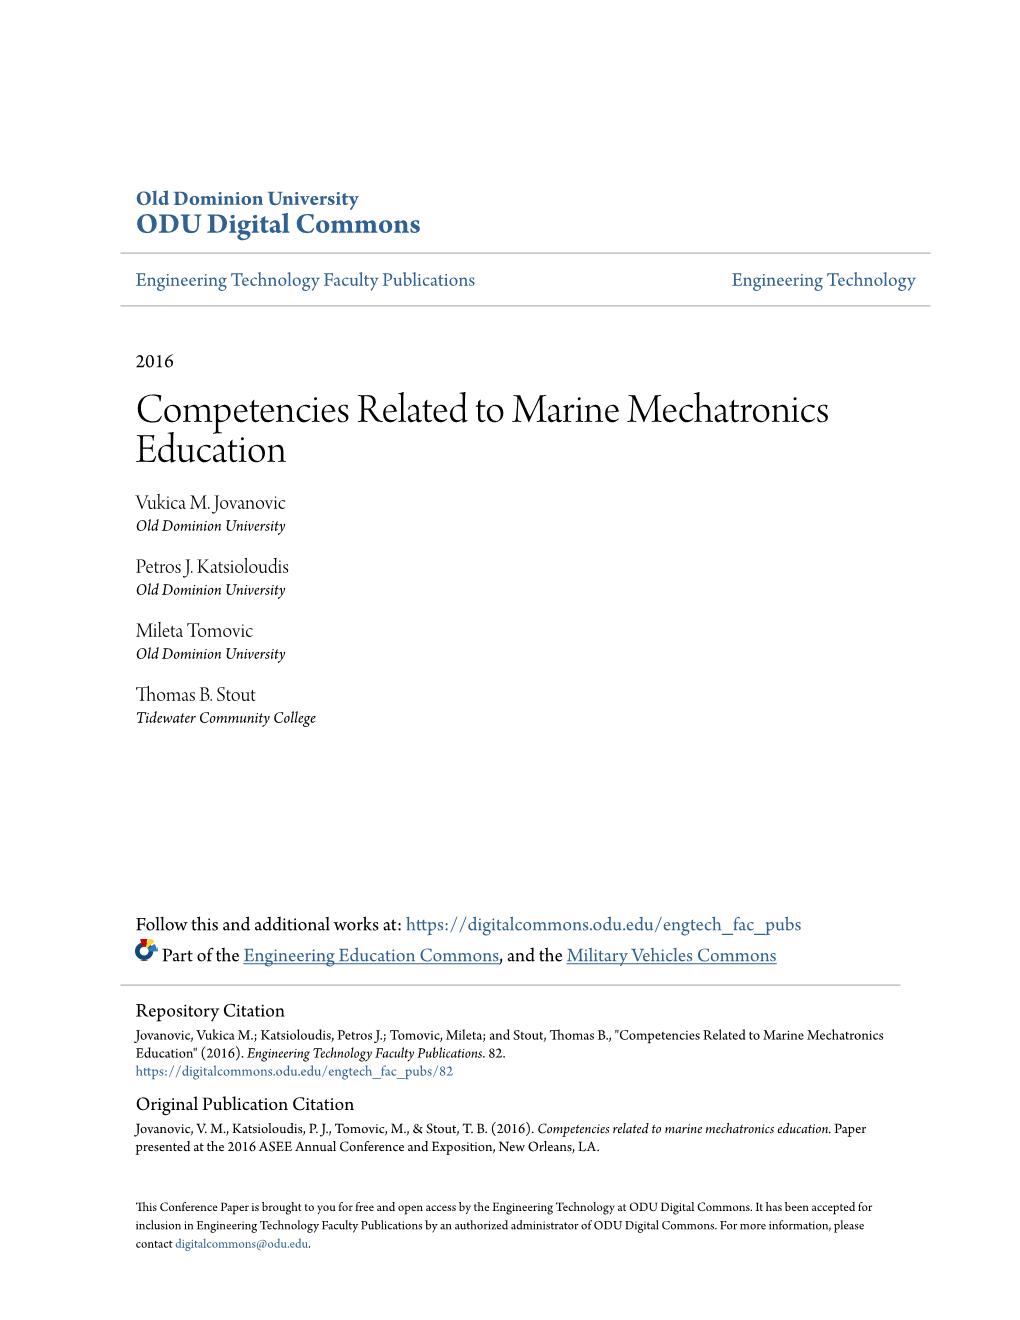 Competencies Related to Marine Mechatronics Education Vukica M